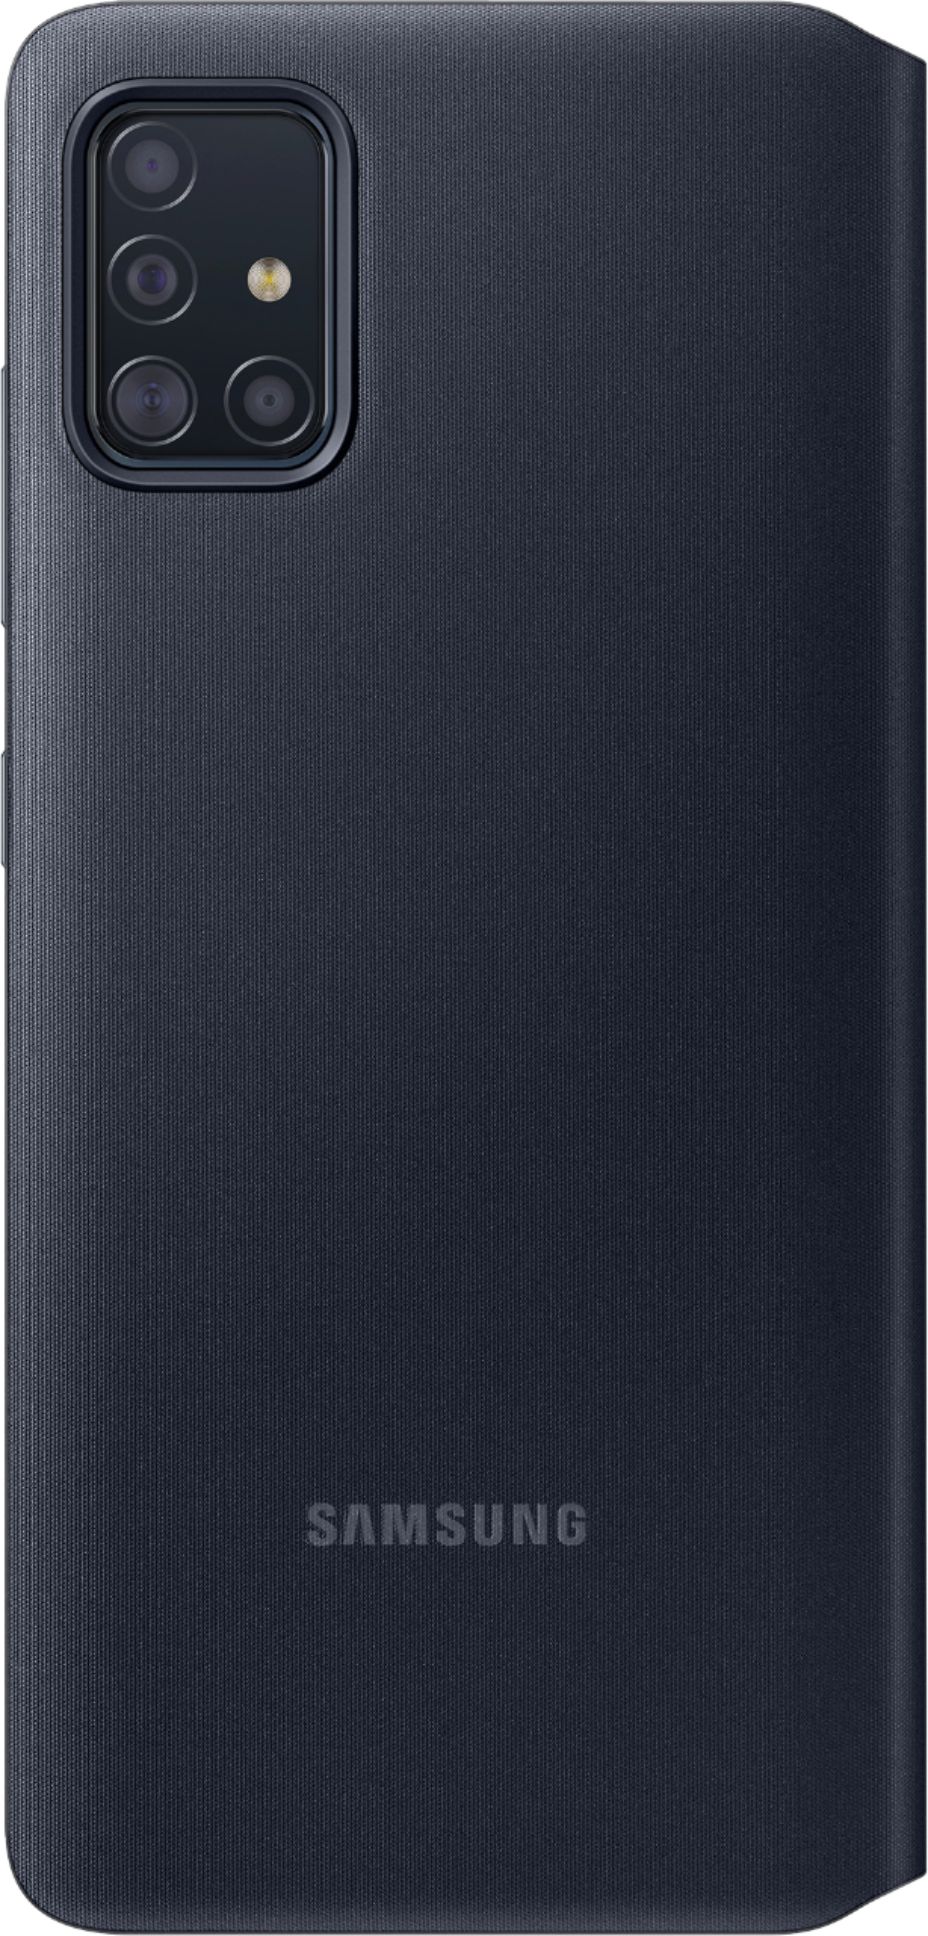 plak Voorkomen studie Best Buy: Samsung S View Wallet Case for Galaxy A51 Black EF-EA515PBEGUS